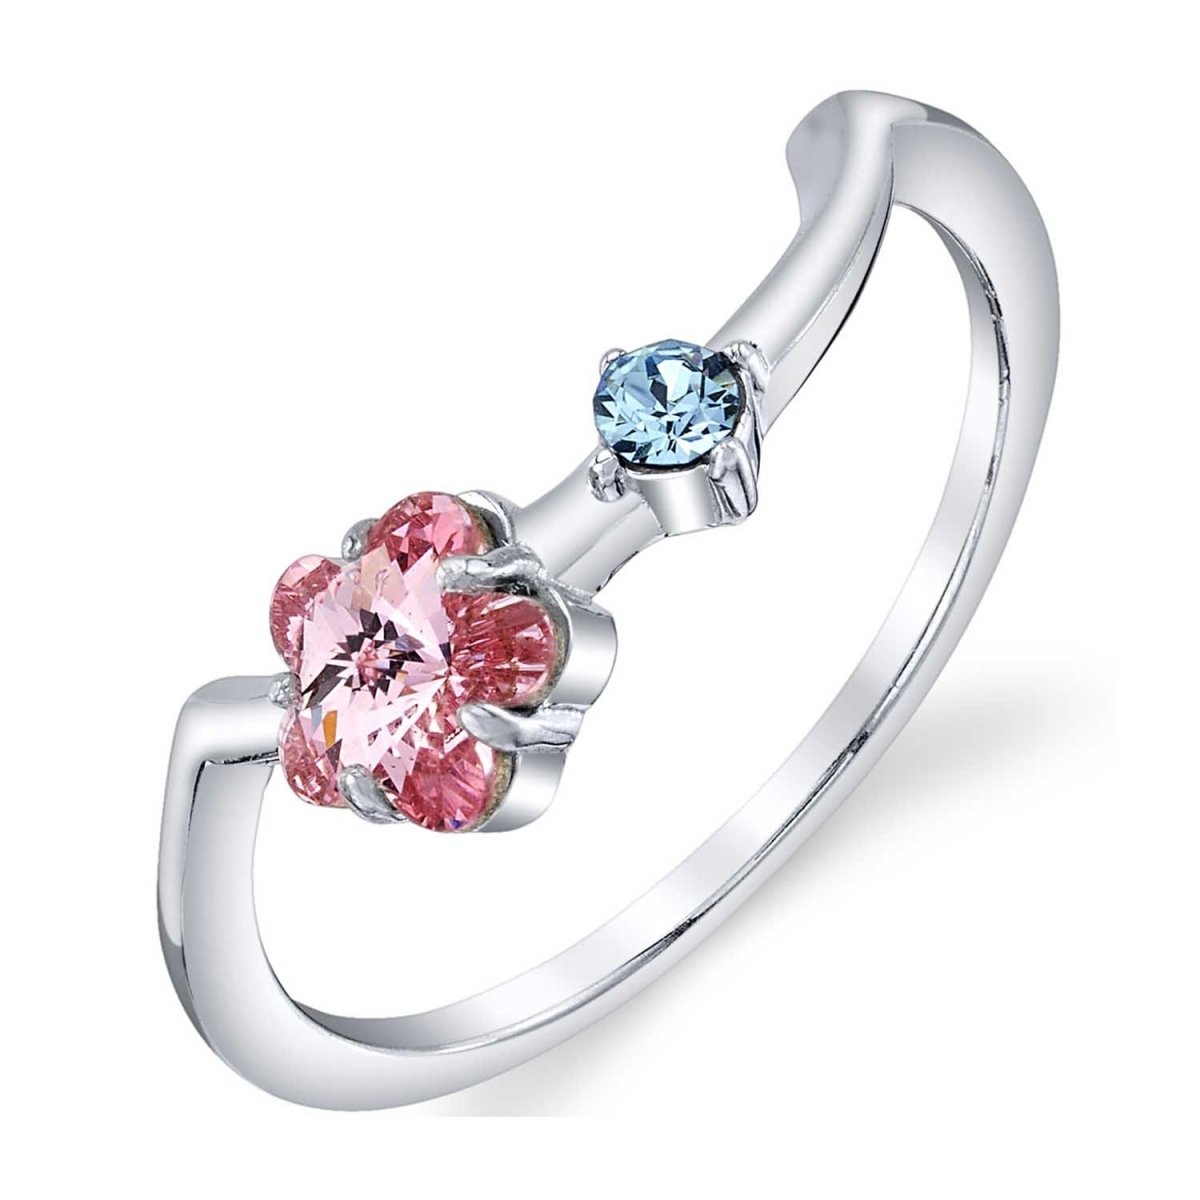 Weisfield Jewelers Diamond Anniversary Rings Trade Print Magazine Ad ADVERT  | eBay